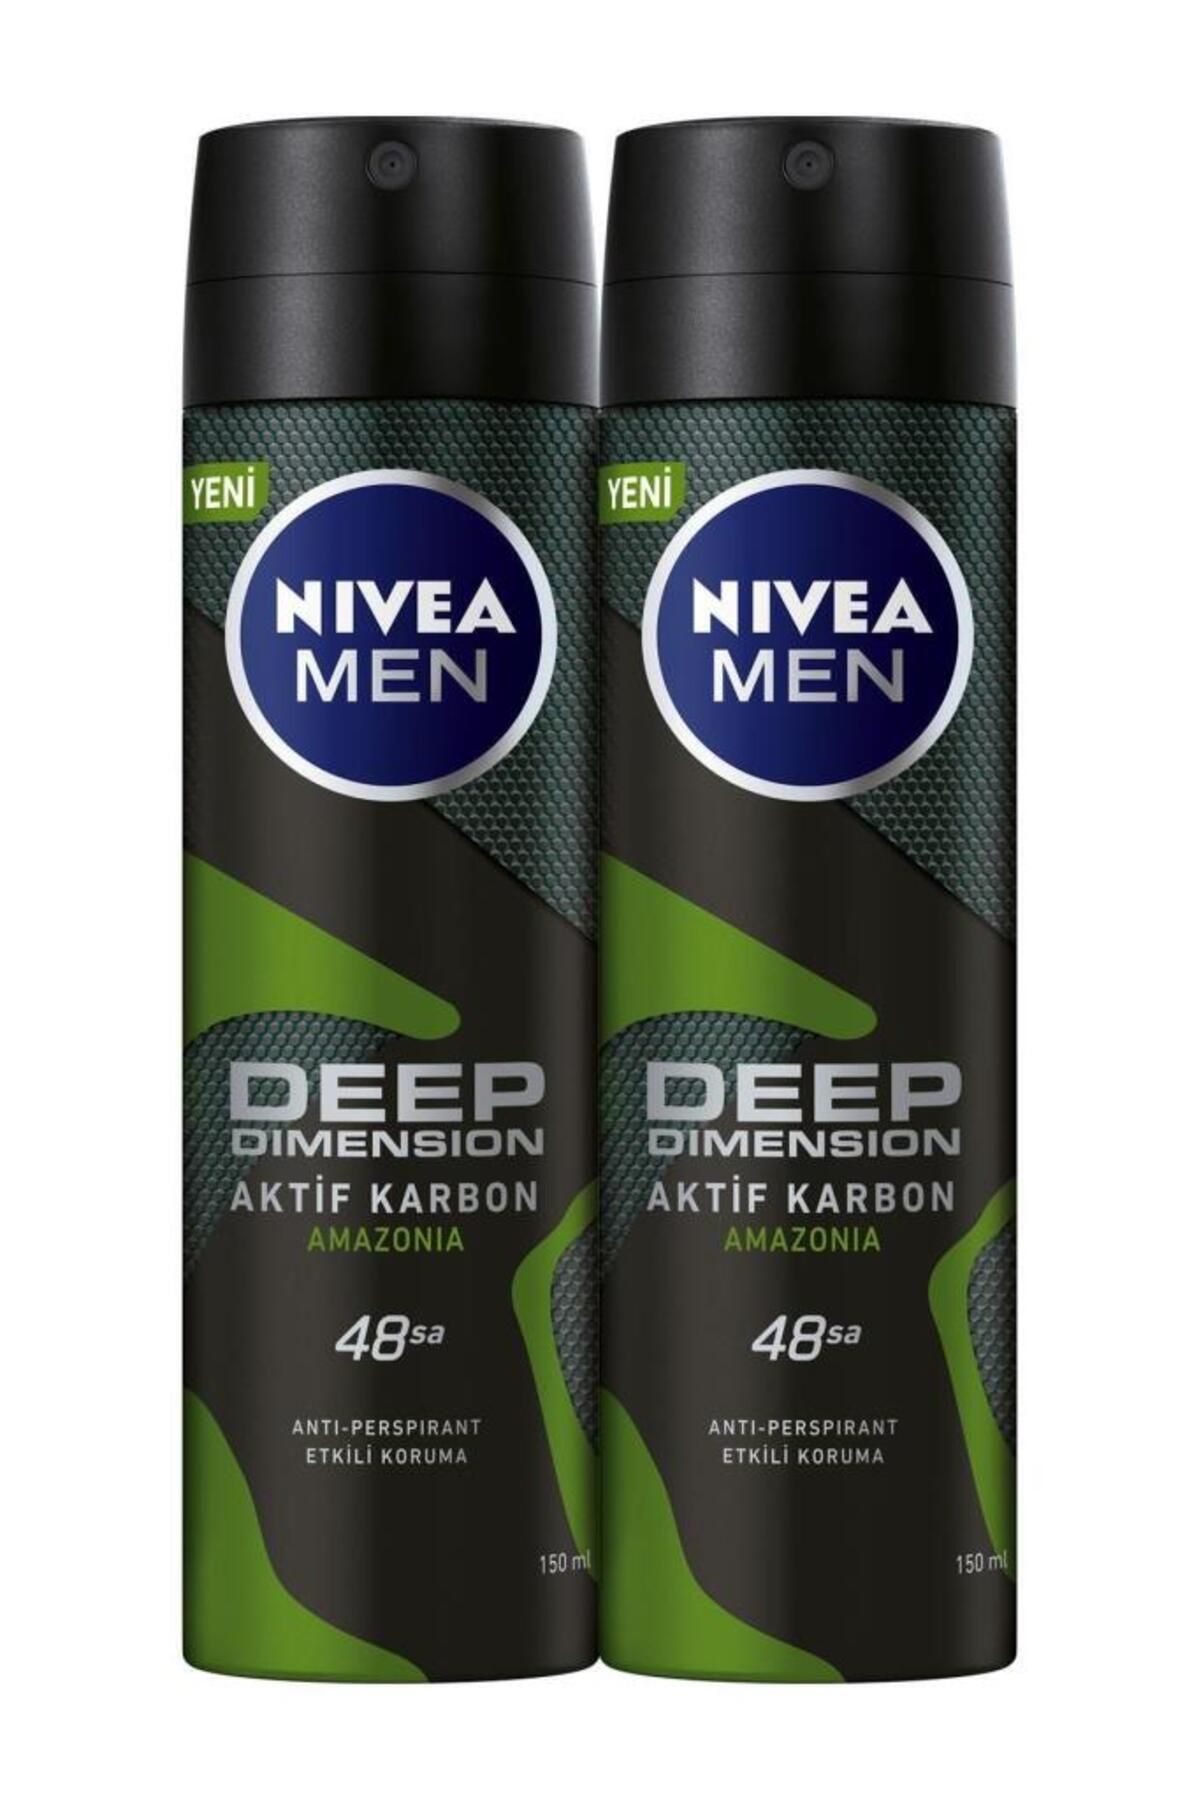 NIVEA Deep Dimension Amazonia 48 Saat Anti-perspirant Koruma 150ml X2 Adet Men Erkek Sprey Deodorant